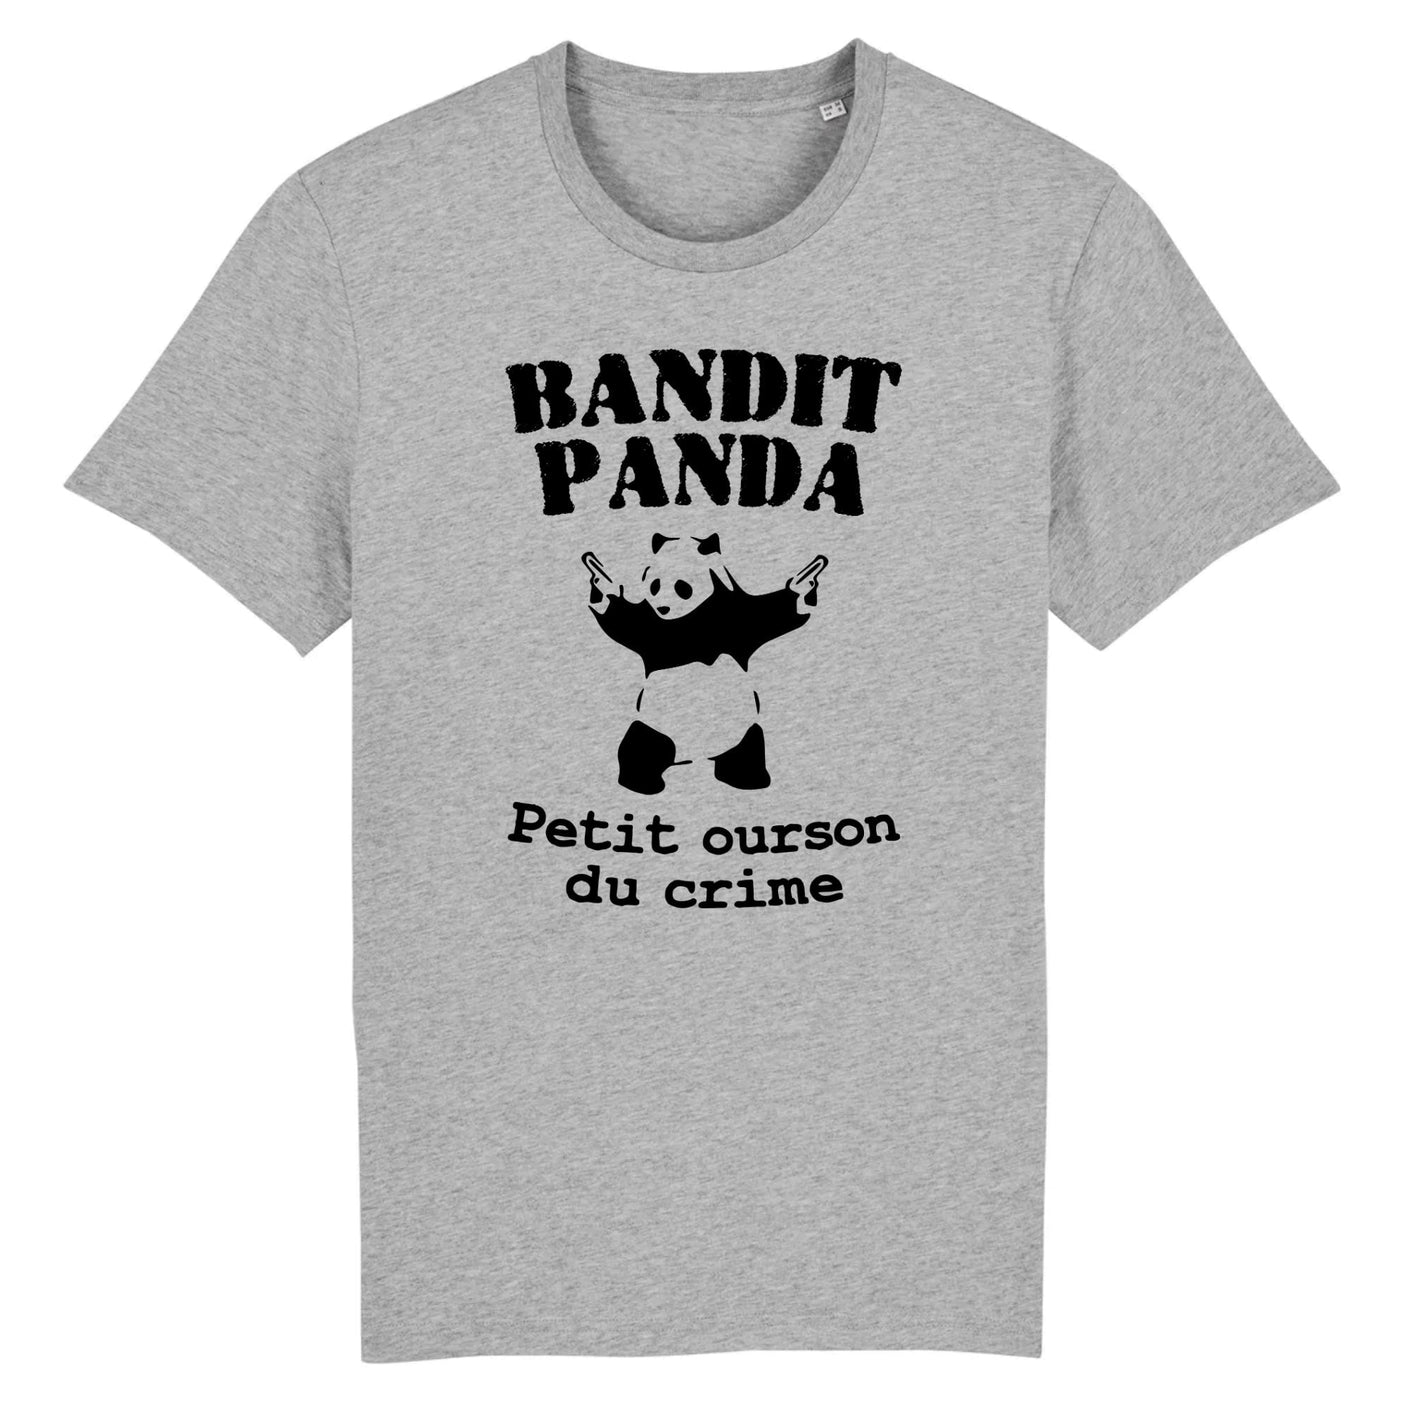 T-Shirt Homme Bandit panda 